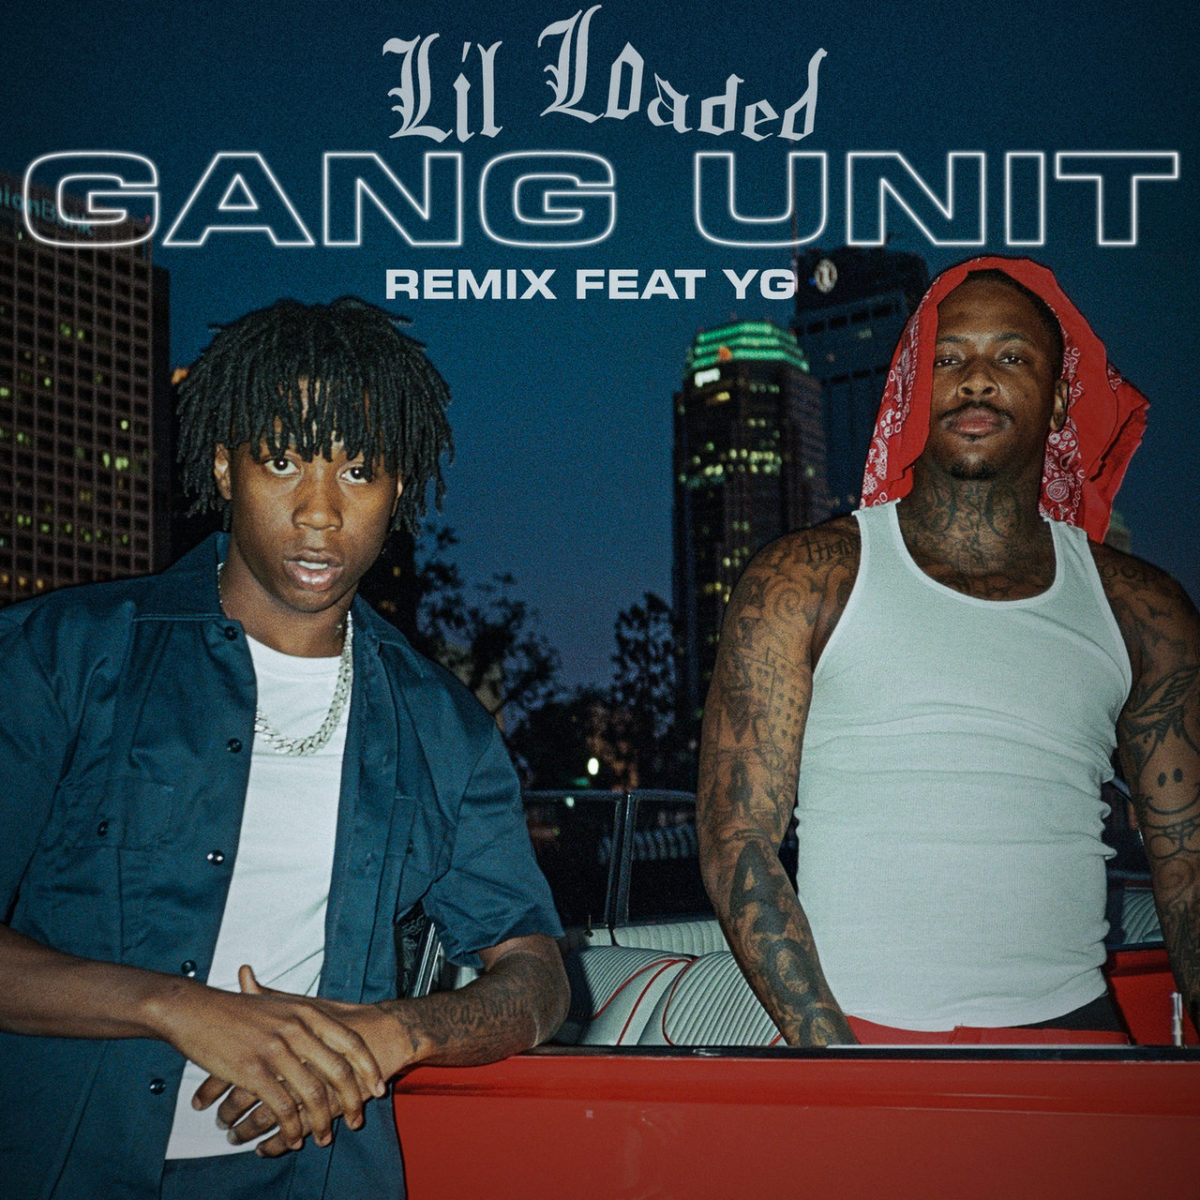 Lil Loaded - Gang Unit (Remix) (ft. YG) (Cover)